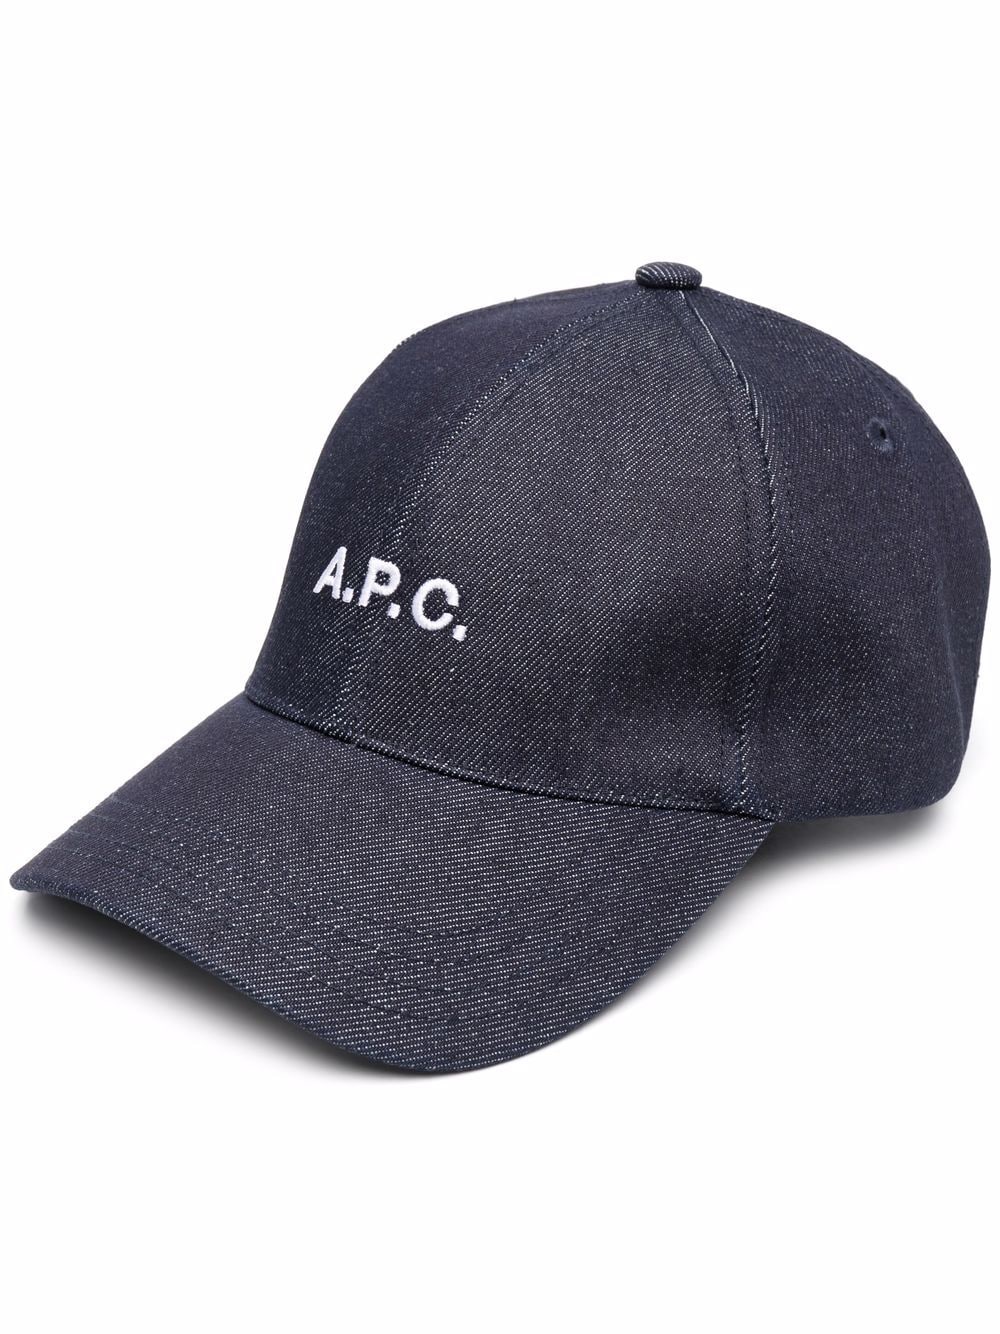 A.P.C. Casquette Charlie baseball cap - Blue von A.P.C.